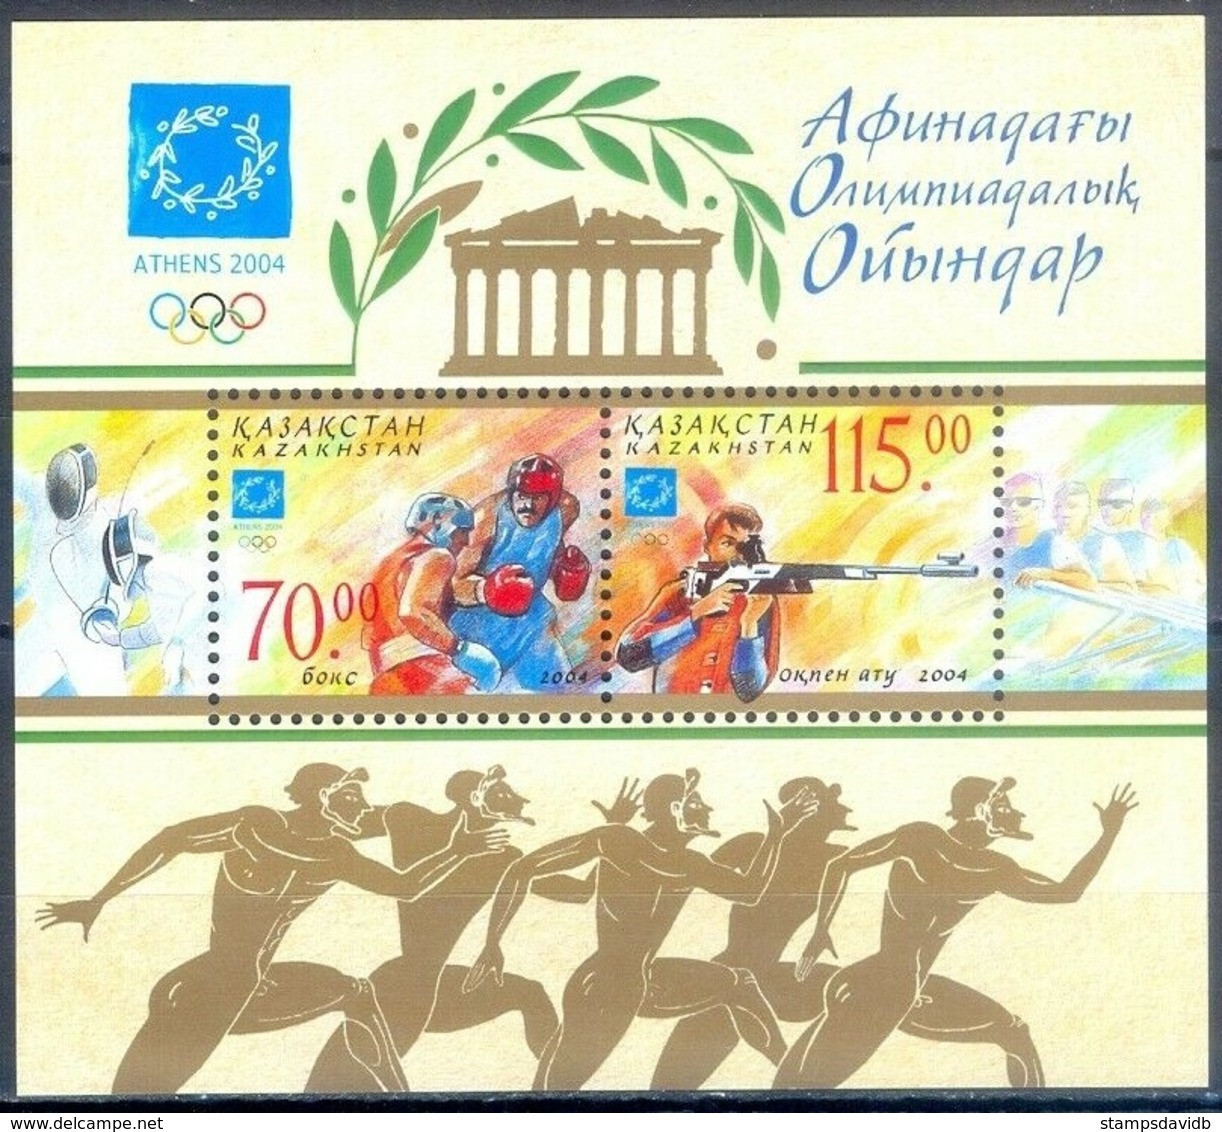 2004	Kazakstan	472-473/B30	2004 Olympic Games In Greece	4,50 € - Sommer 2004: Athen